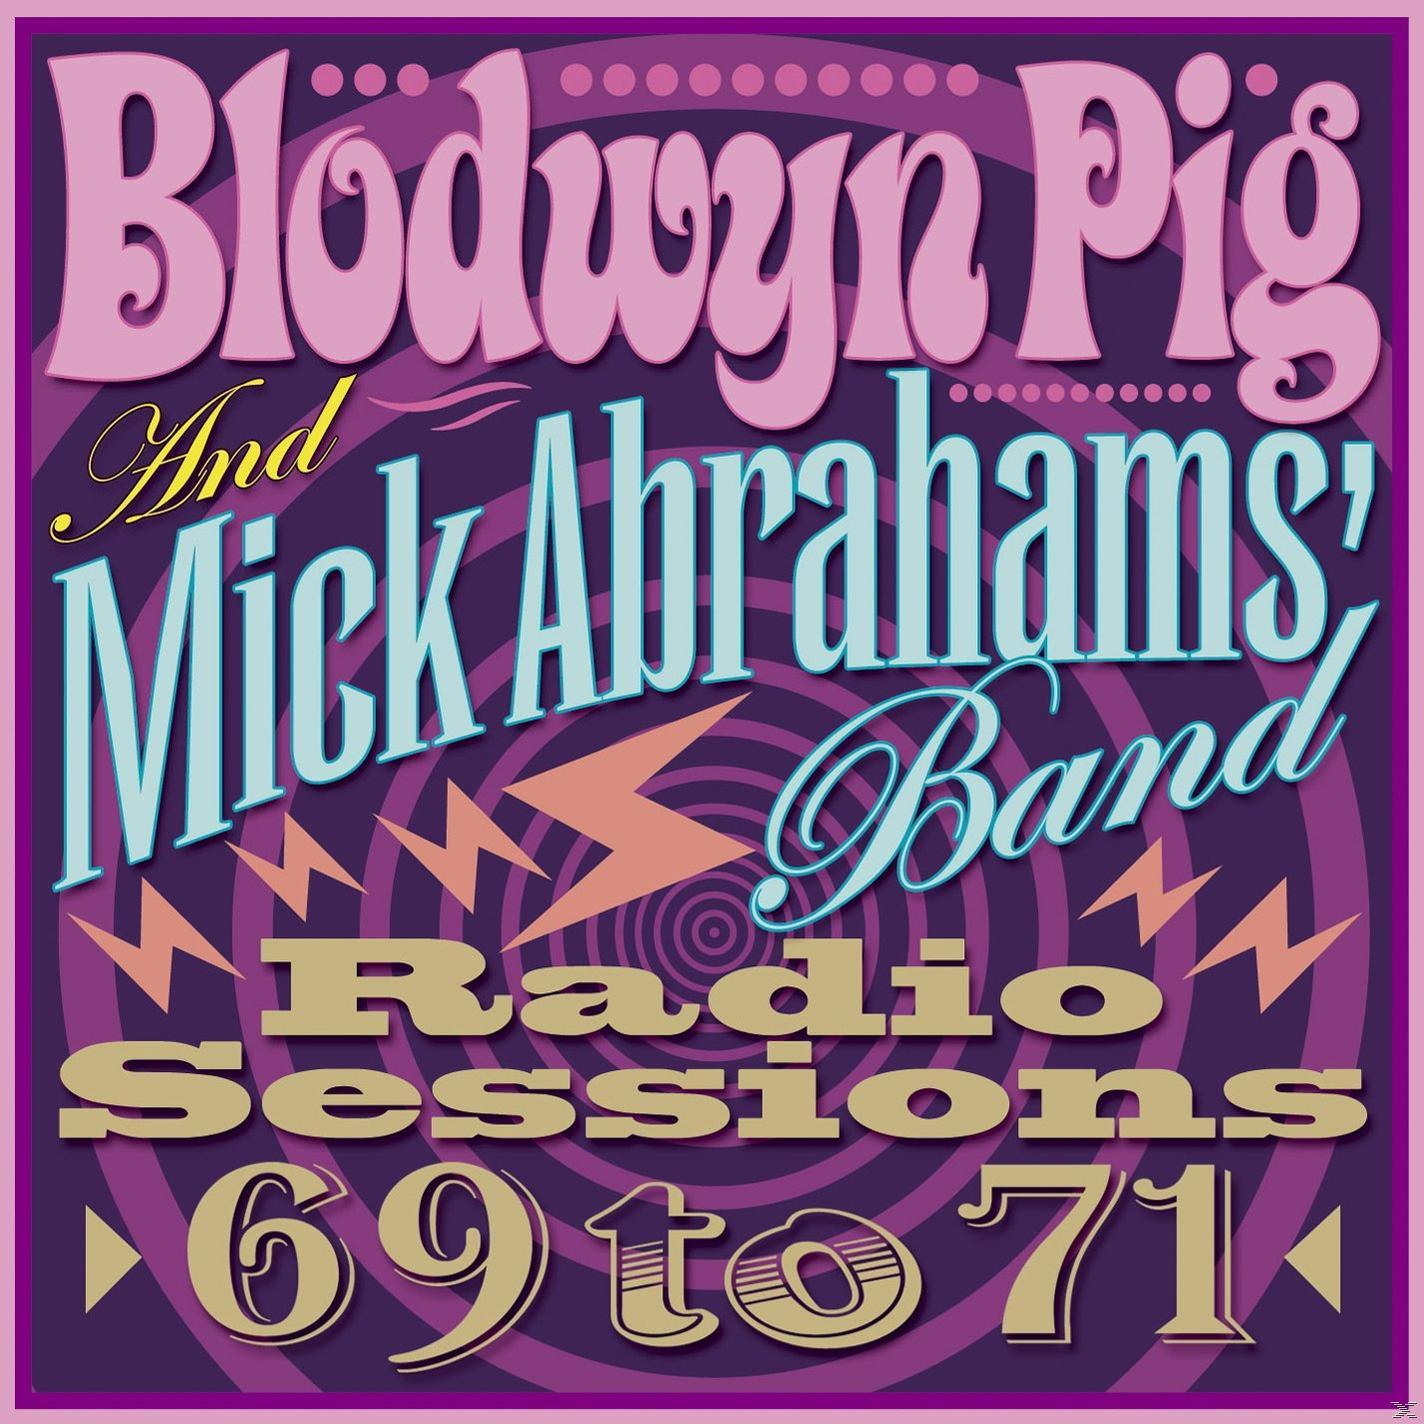 Band - Pig, Blodwyn 1969-1971 Radio Abrahams (CD) - & Sessions Mick